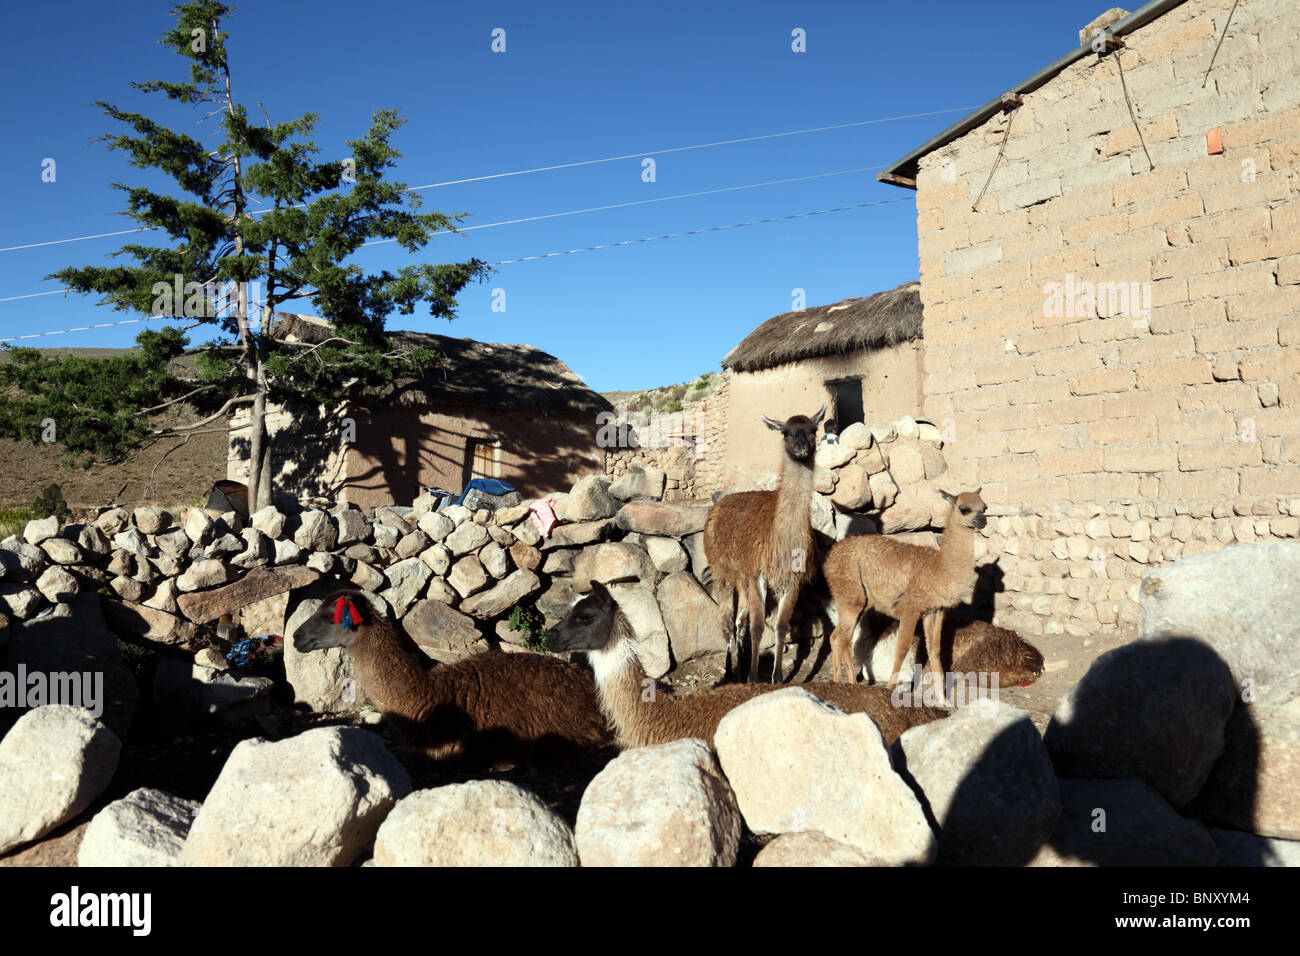 Llamas (Lama glama) in yard of typical adobe mud brick house in community or ayllu near Macha, northern Potosi region, Bolivia Stock Photo